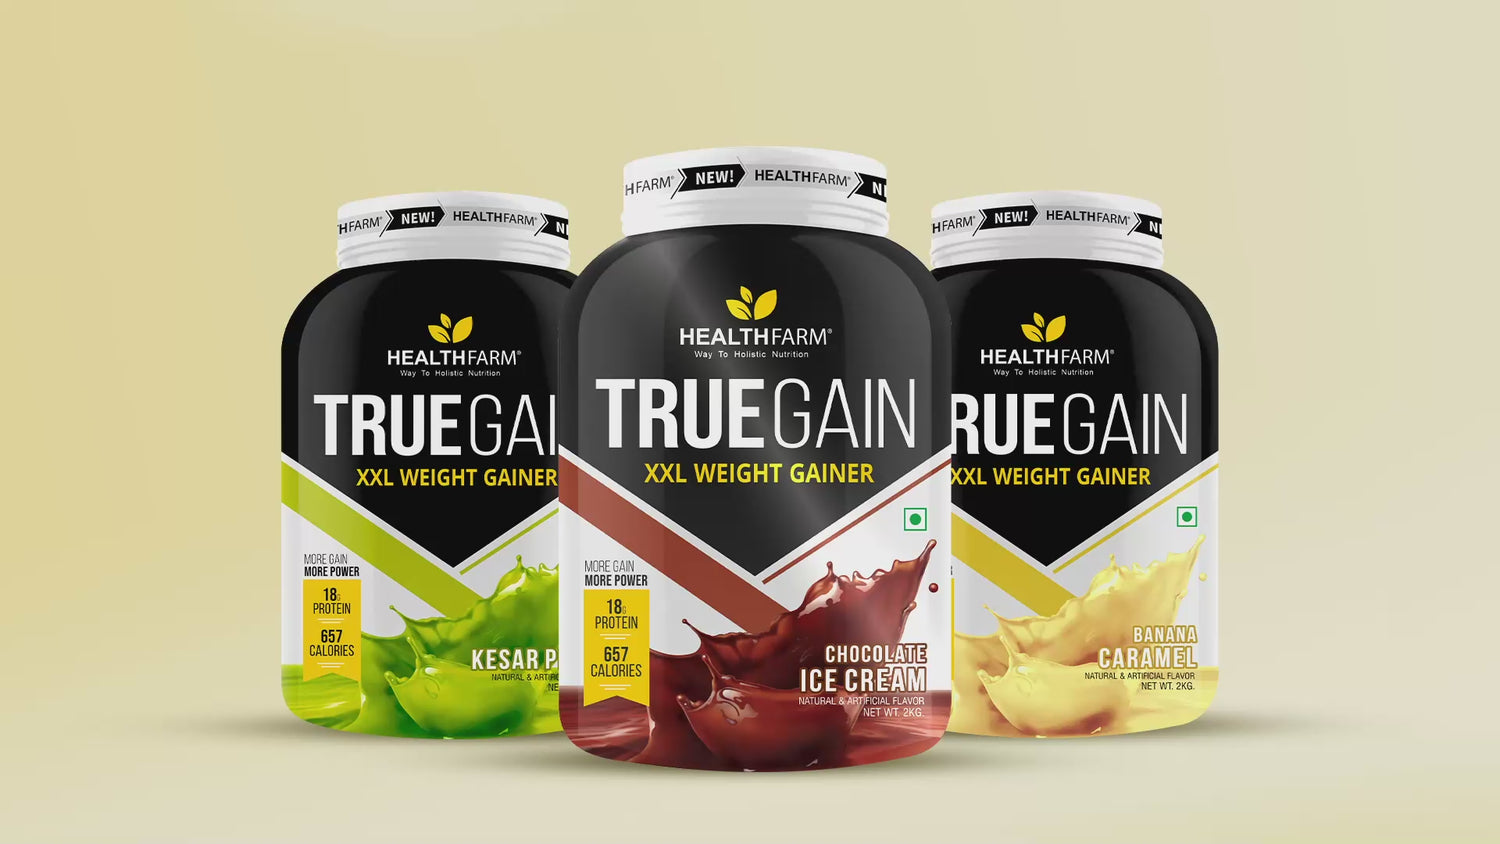  TrueGain - Healthfarm